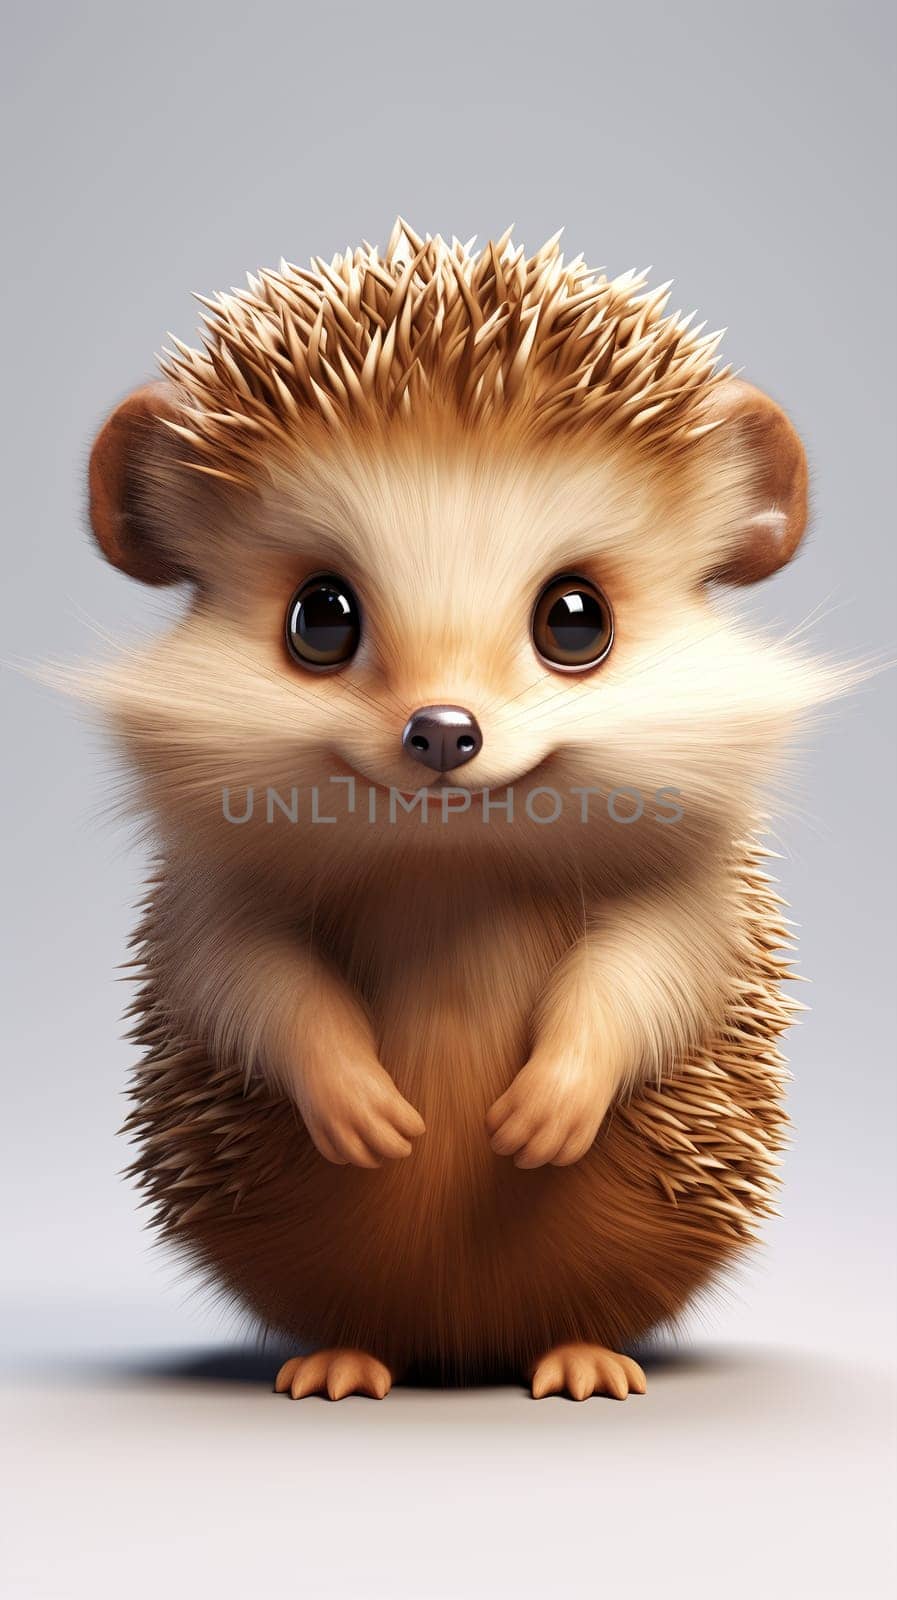 a realistic small hedgehog on a grey background by chrisroll